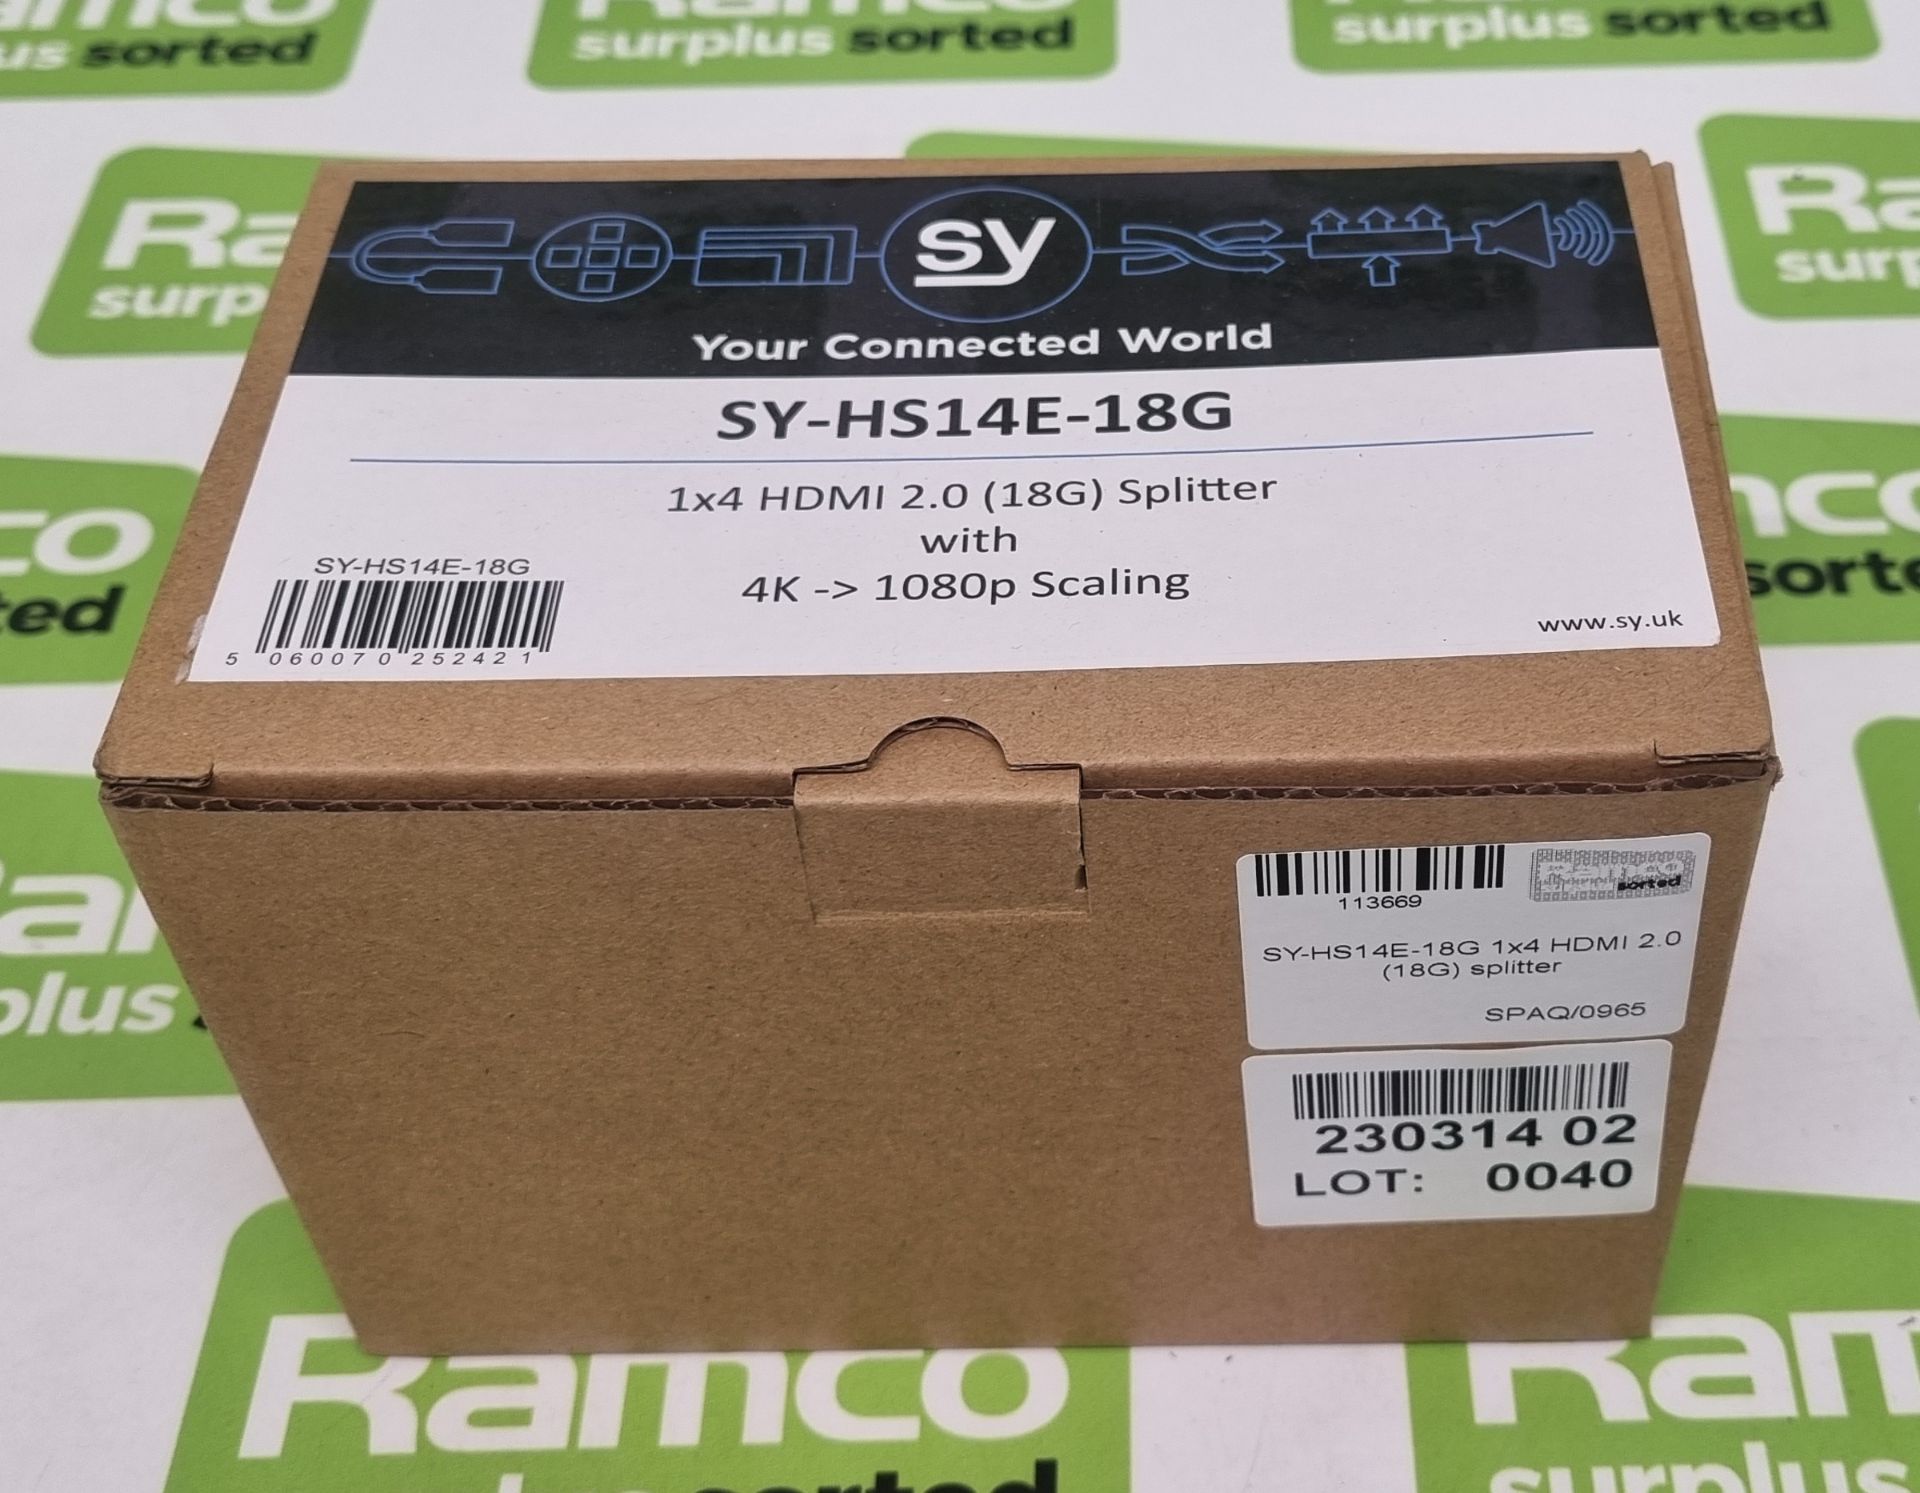 SY-HS14E-18G 1x4 HDMI 2.0 (18G) splitter